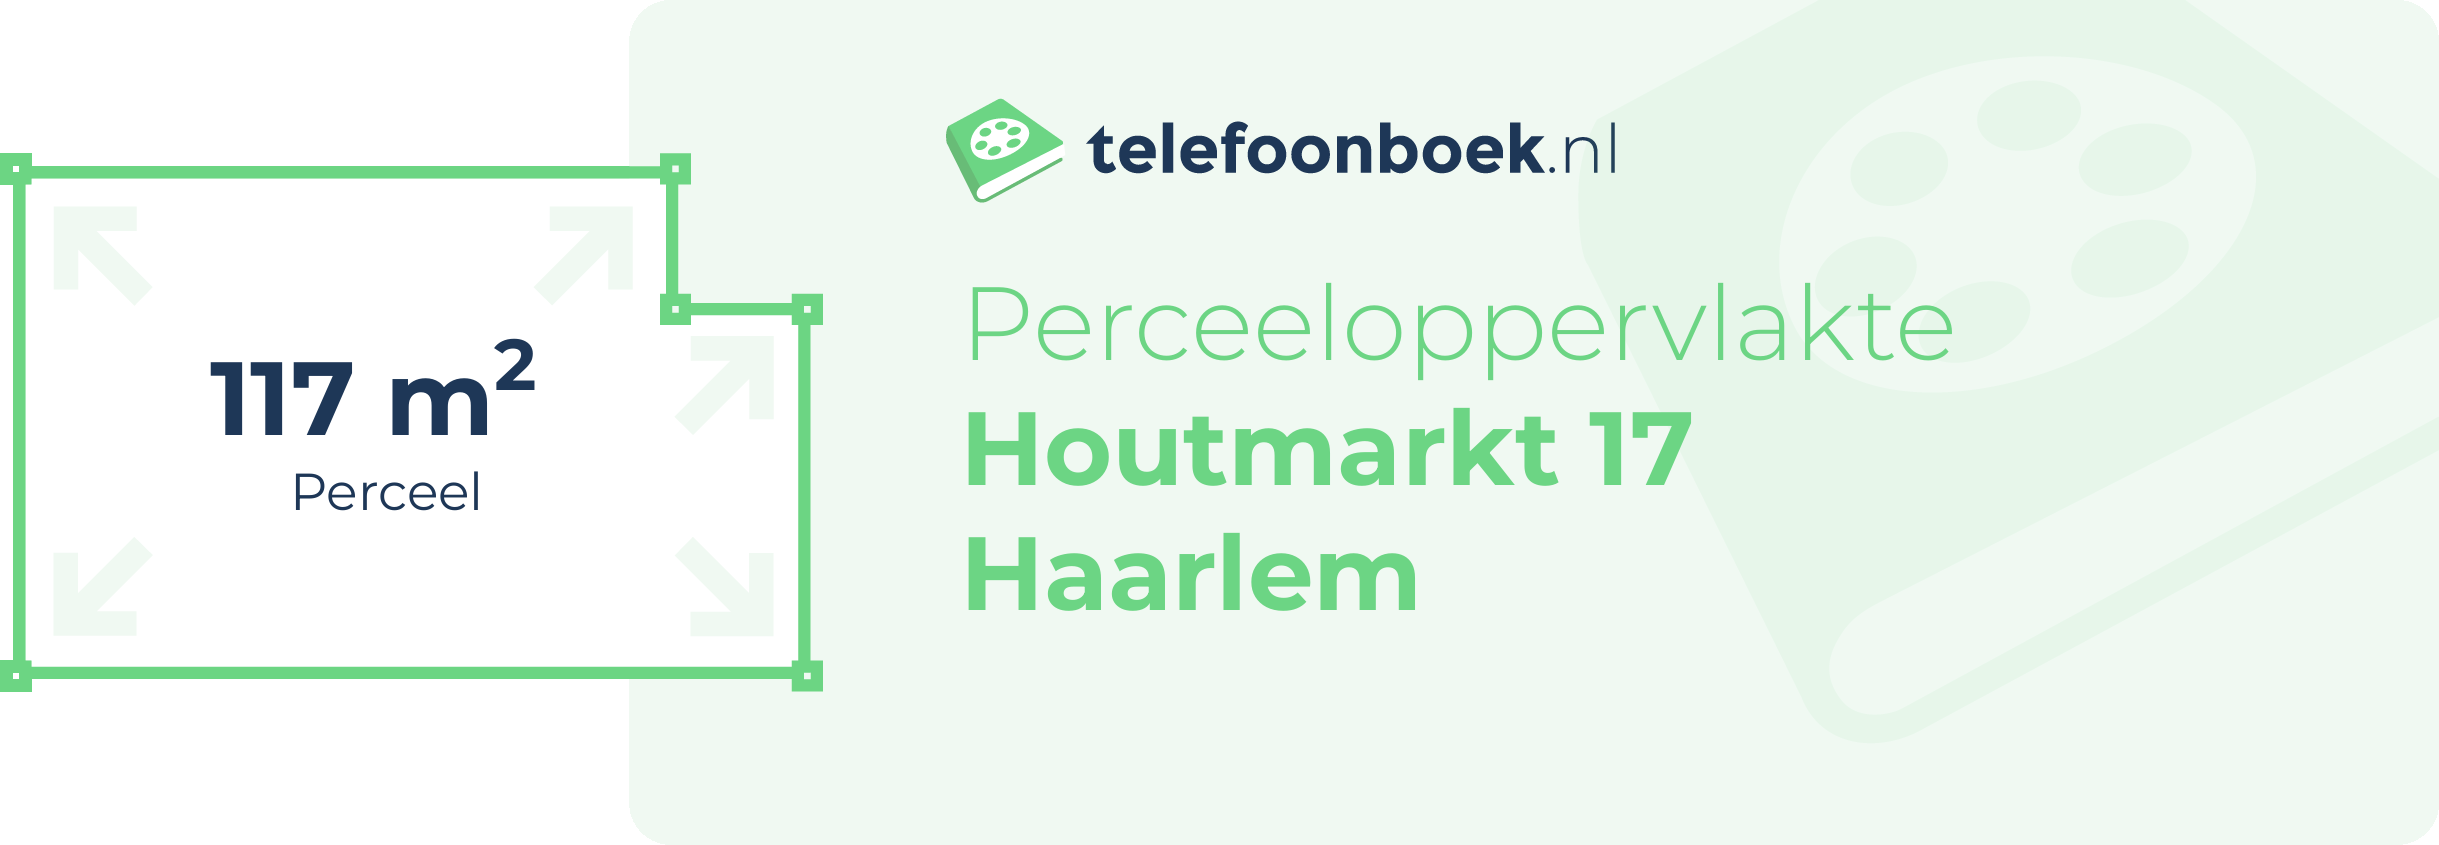 Perceeloppervlakte Houtmarkt 17 Haarlem